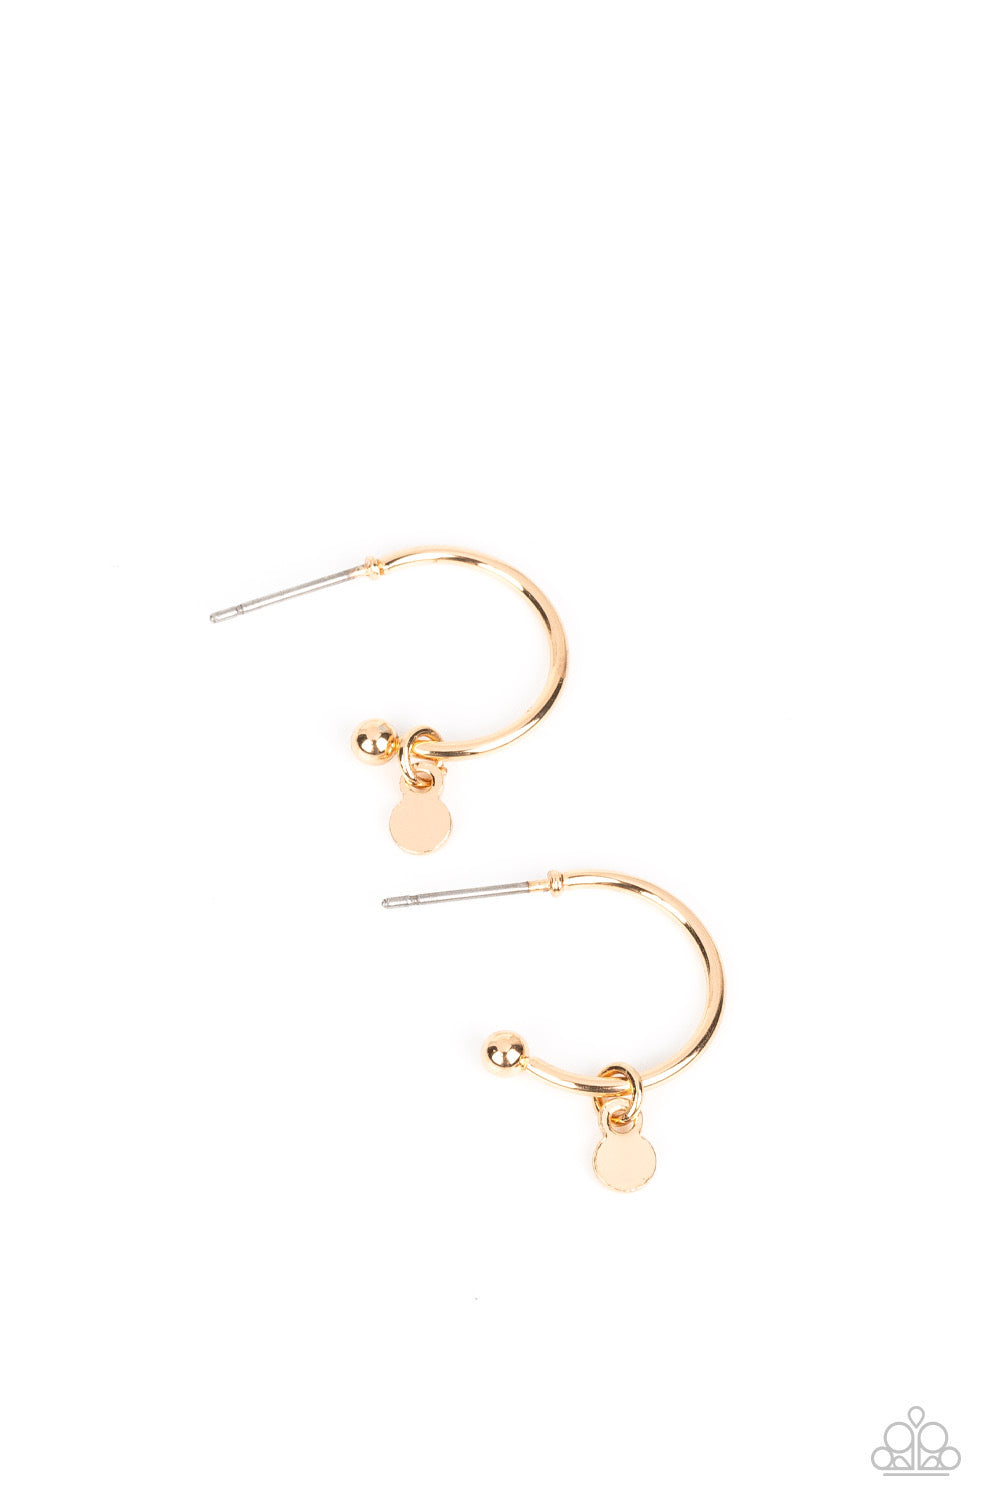 Paparazzi Modern Model - Gold Earrings -Paparazzi Jewelry Images 